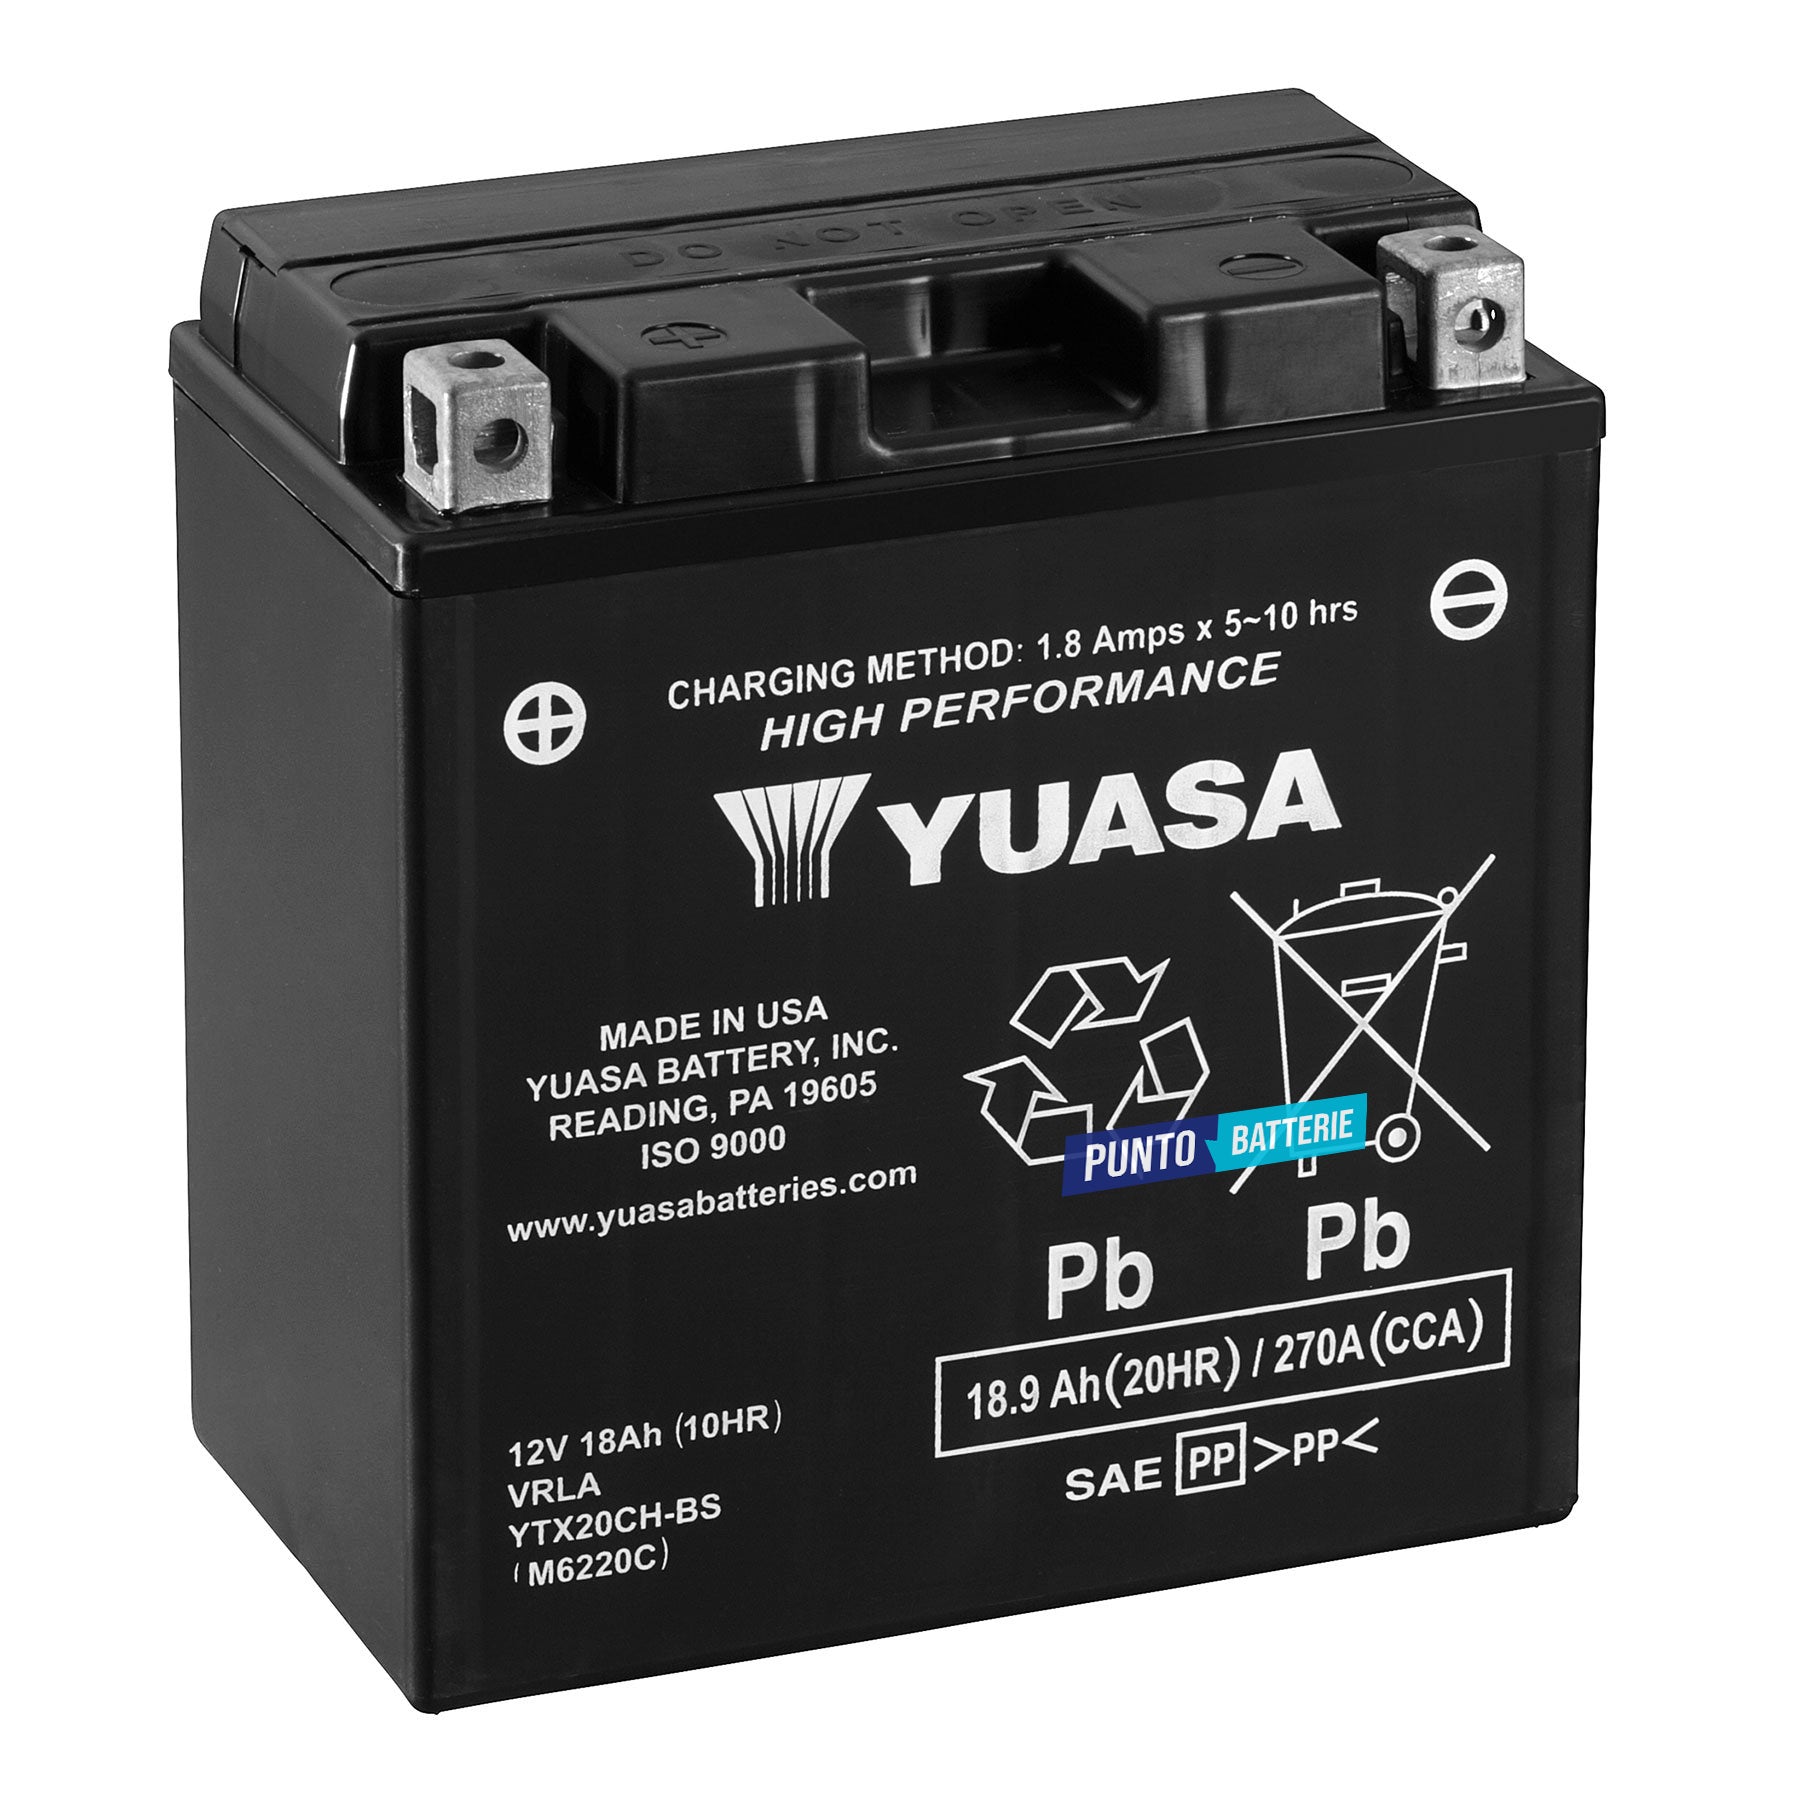 Batteria originale Yuasa YTX High Performance YTX20CH-BS, dimensioni 150 x 87 x 161, polo positivo a sinistra, 12 volt, 18 amperora, 270 ampere. Batteria per moto, scooter e powersport.